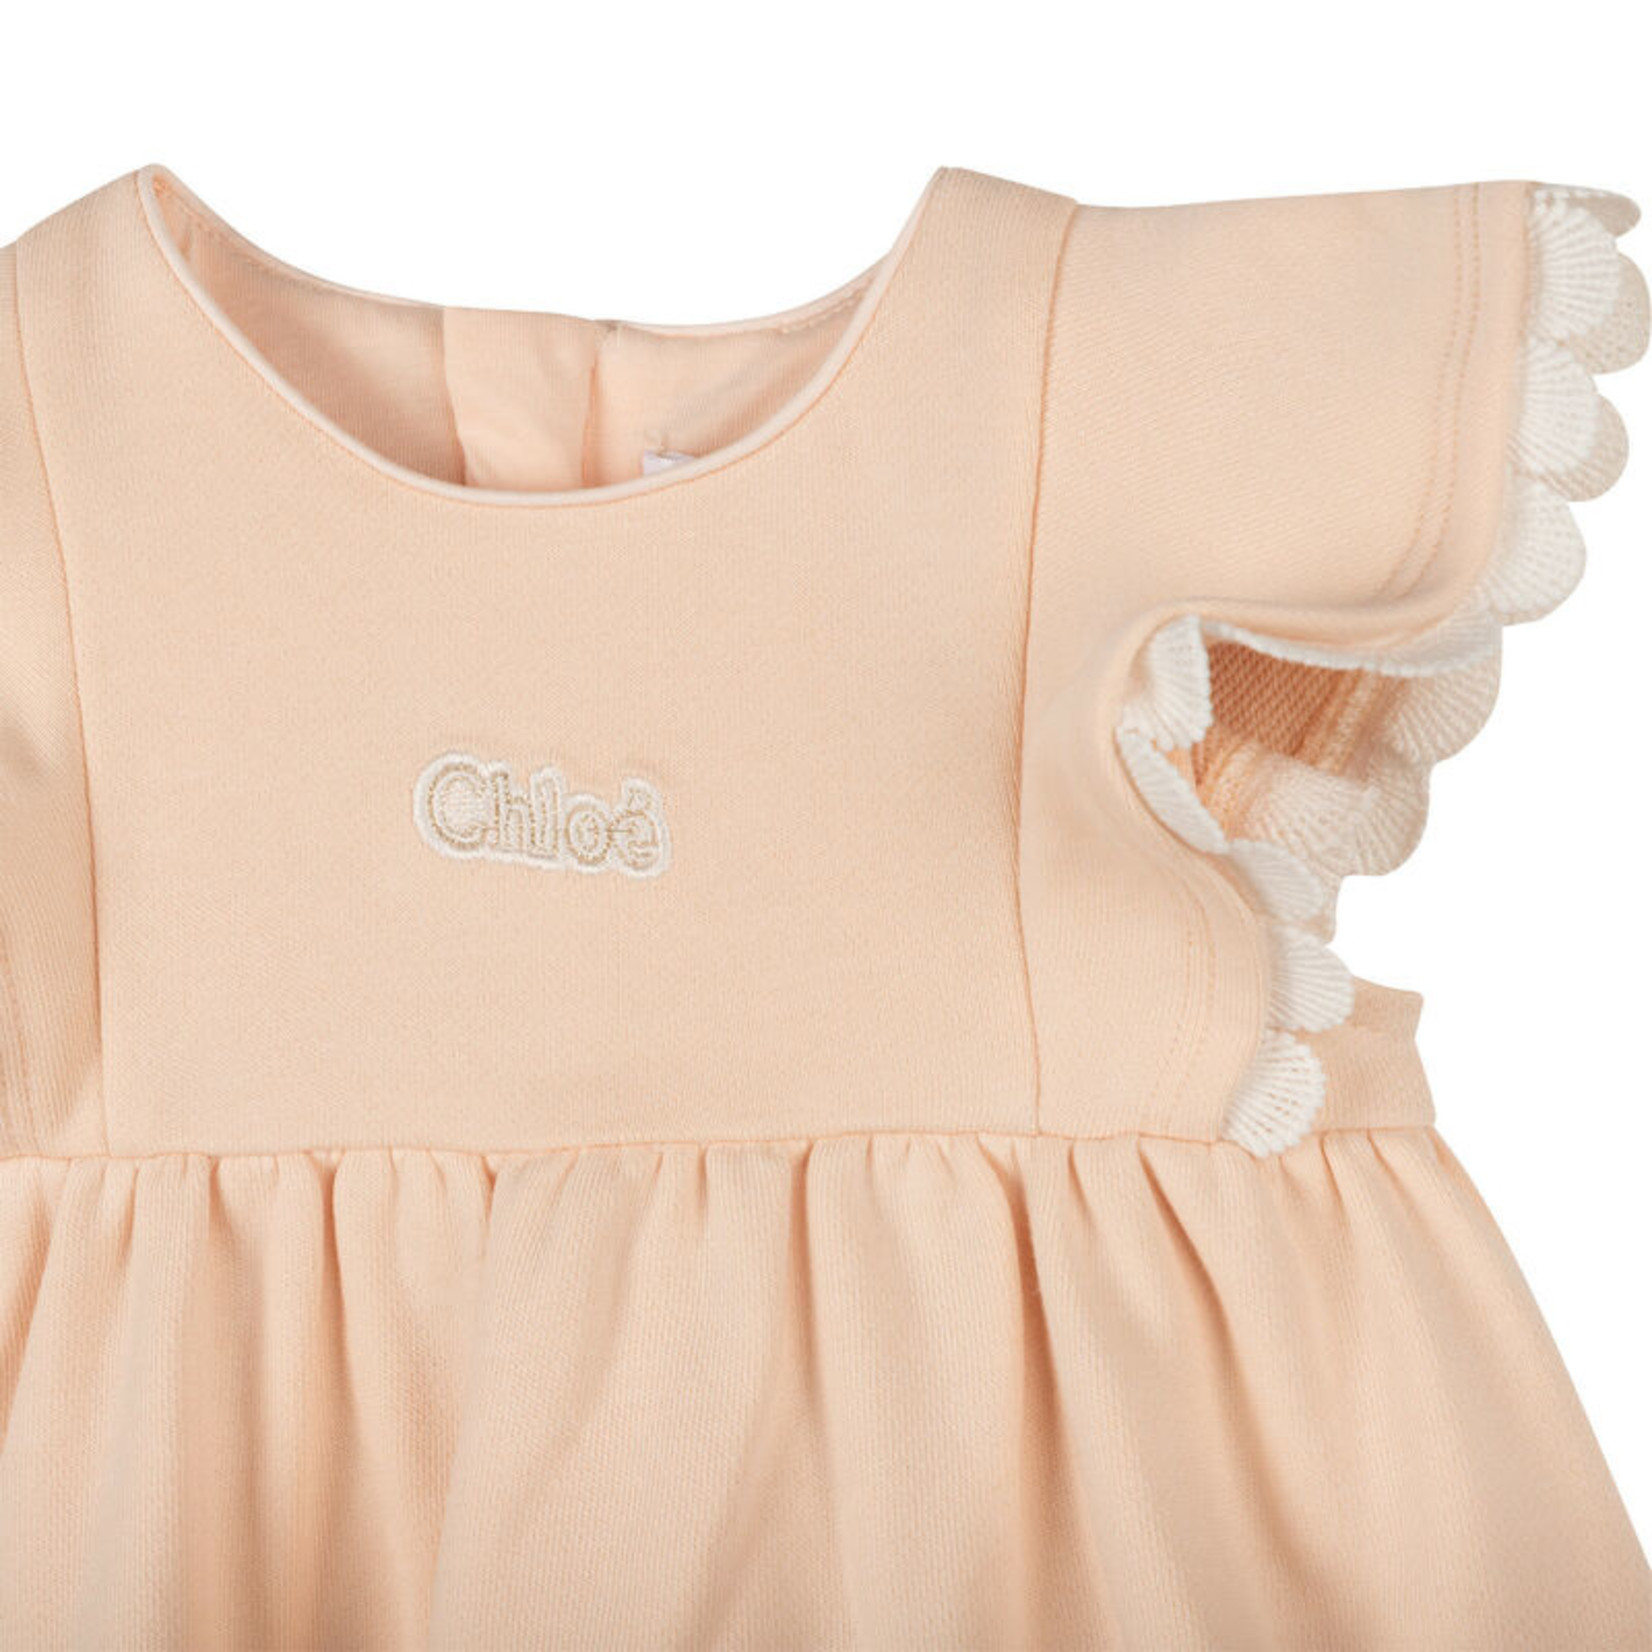 Chloe Chloe - Short-sleeved dress in organic cotton fleece with scalloped guipure trim